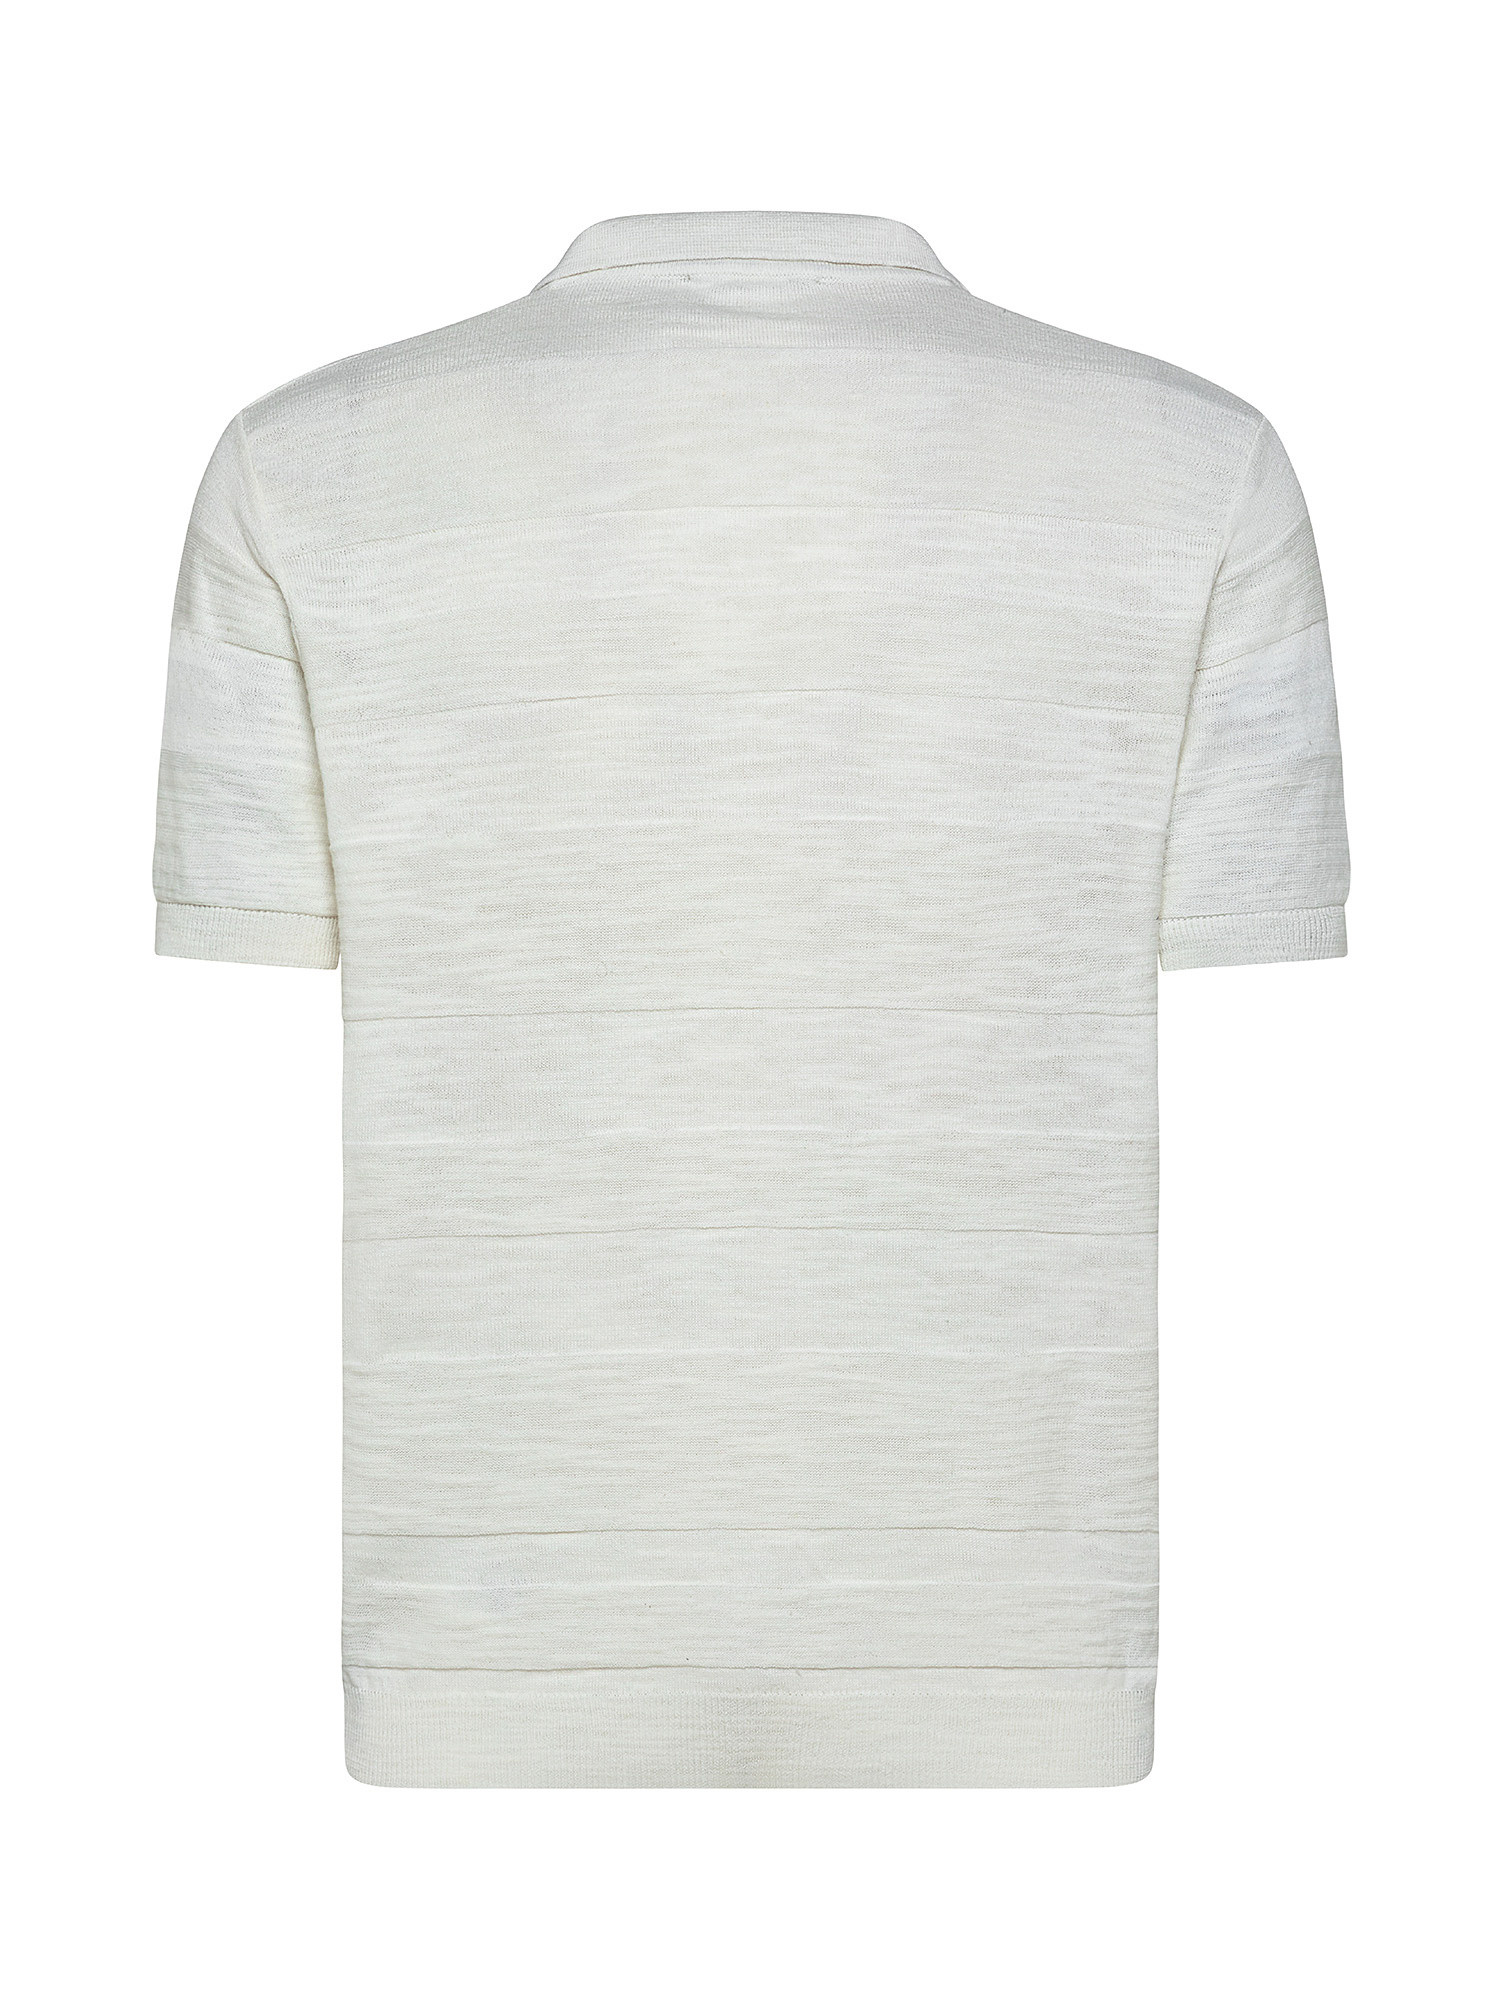 Polo in maglia misto cotone, Bianco, large image number 1